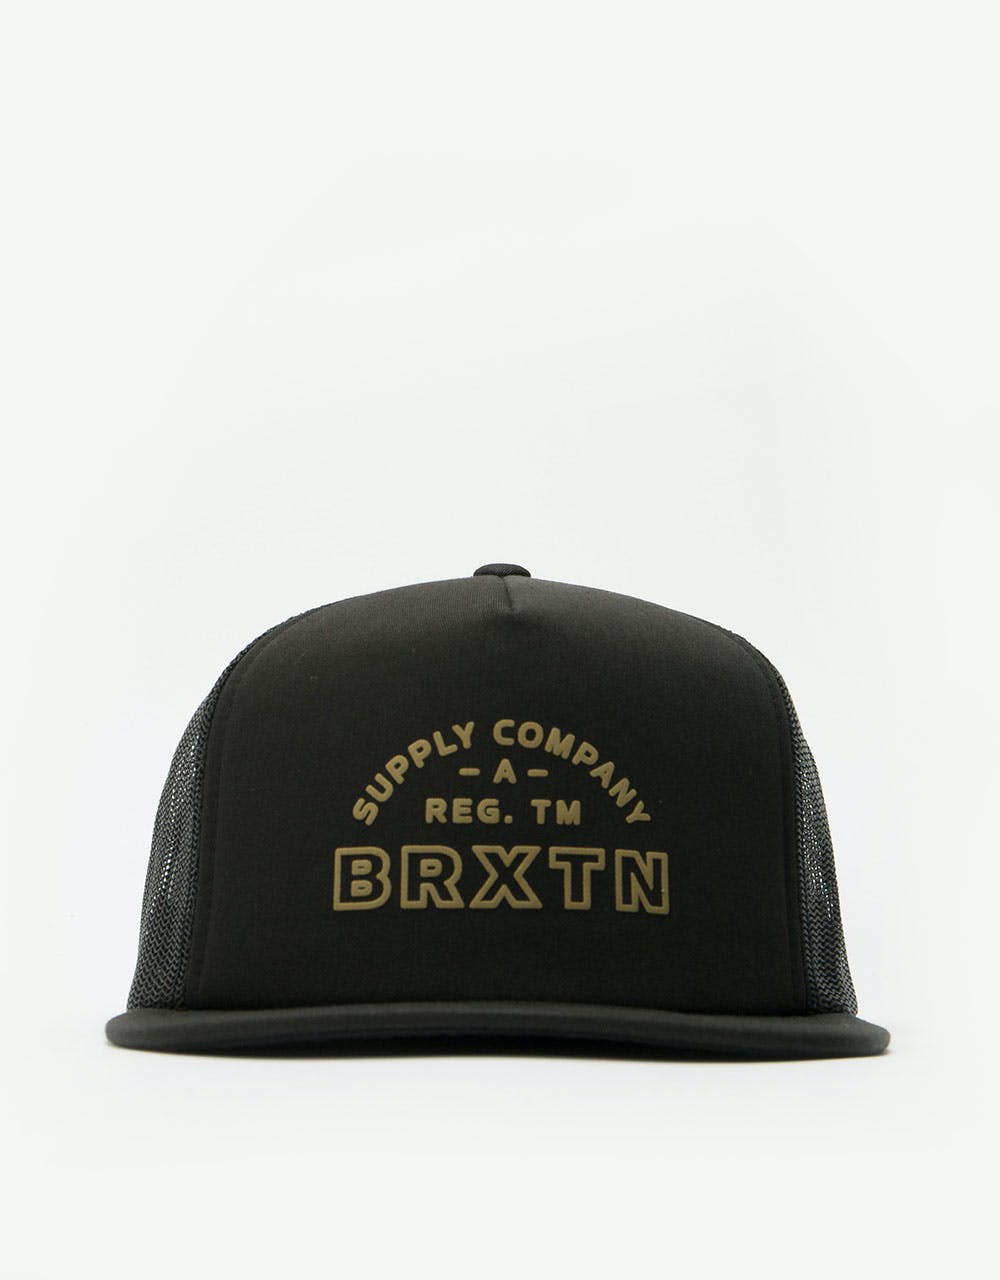 Brixton Knoxxville Mesh Cap - Black